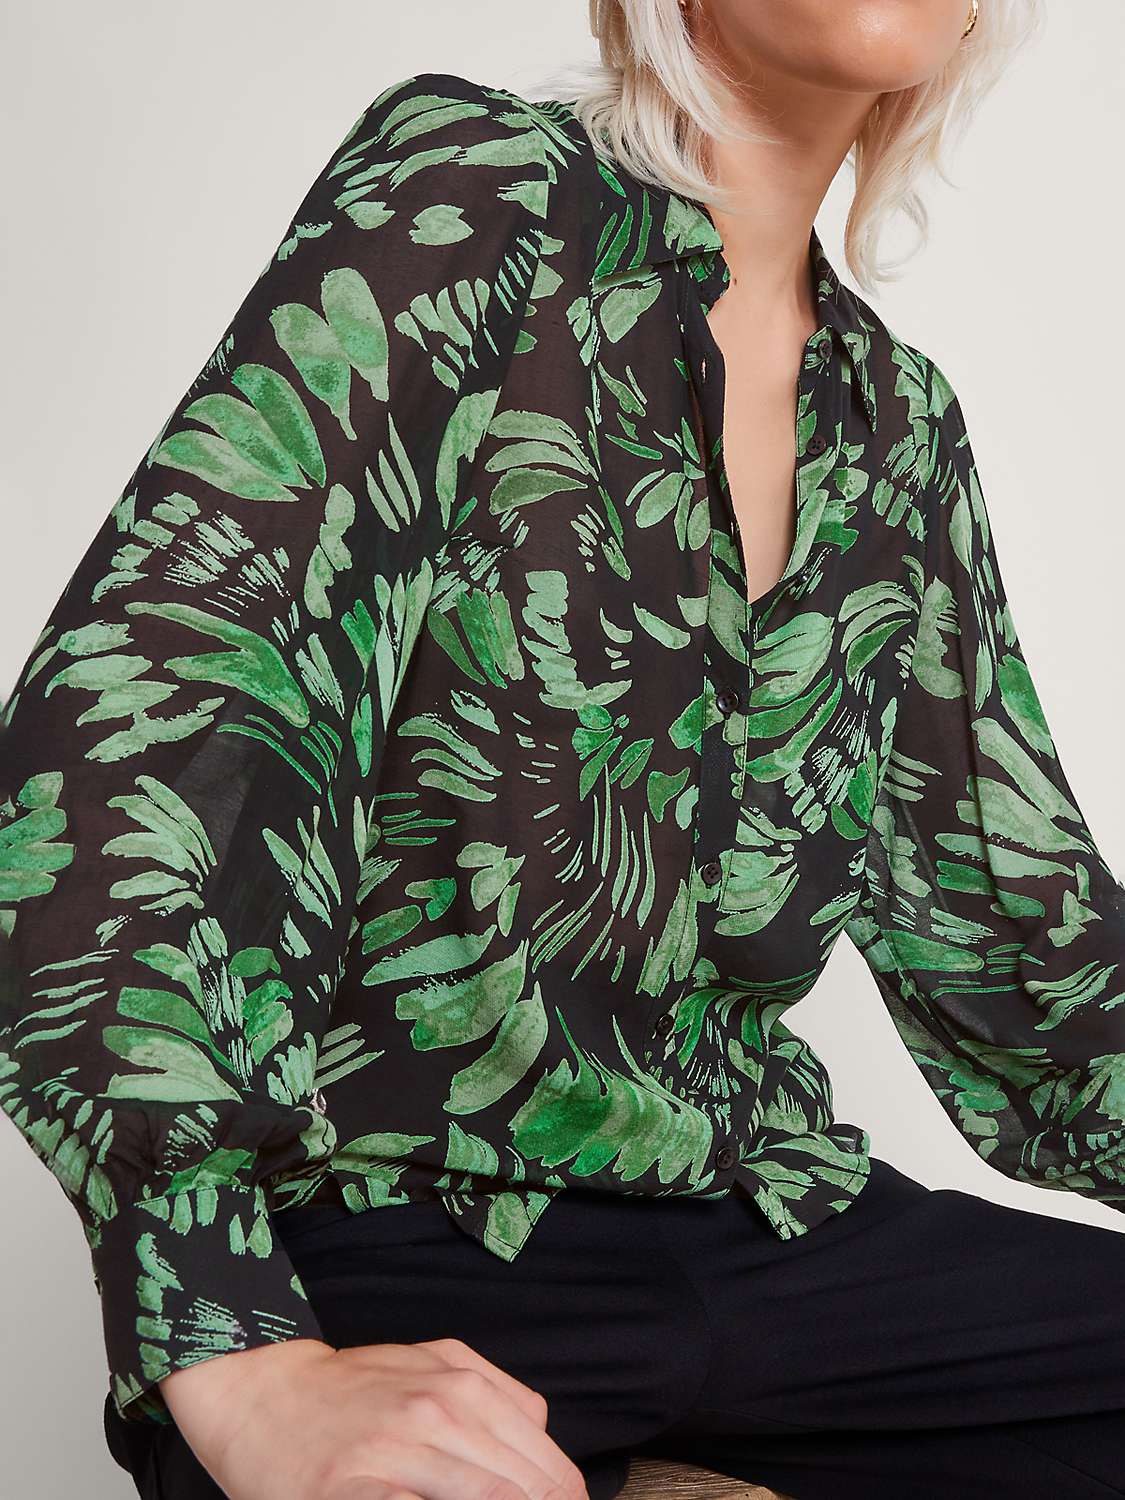 Monsoon Ophelia Sheer Printed Blouse, Black/Green at John Lewis & Partners